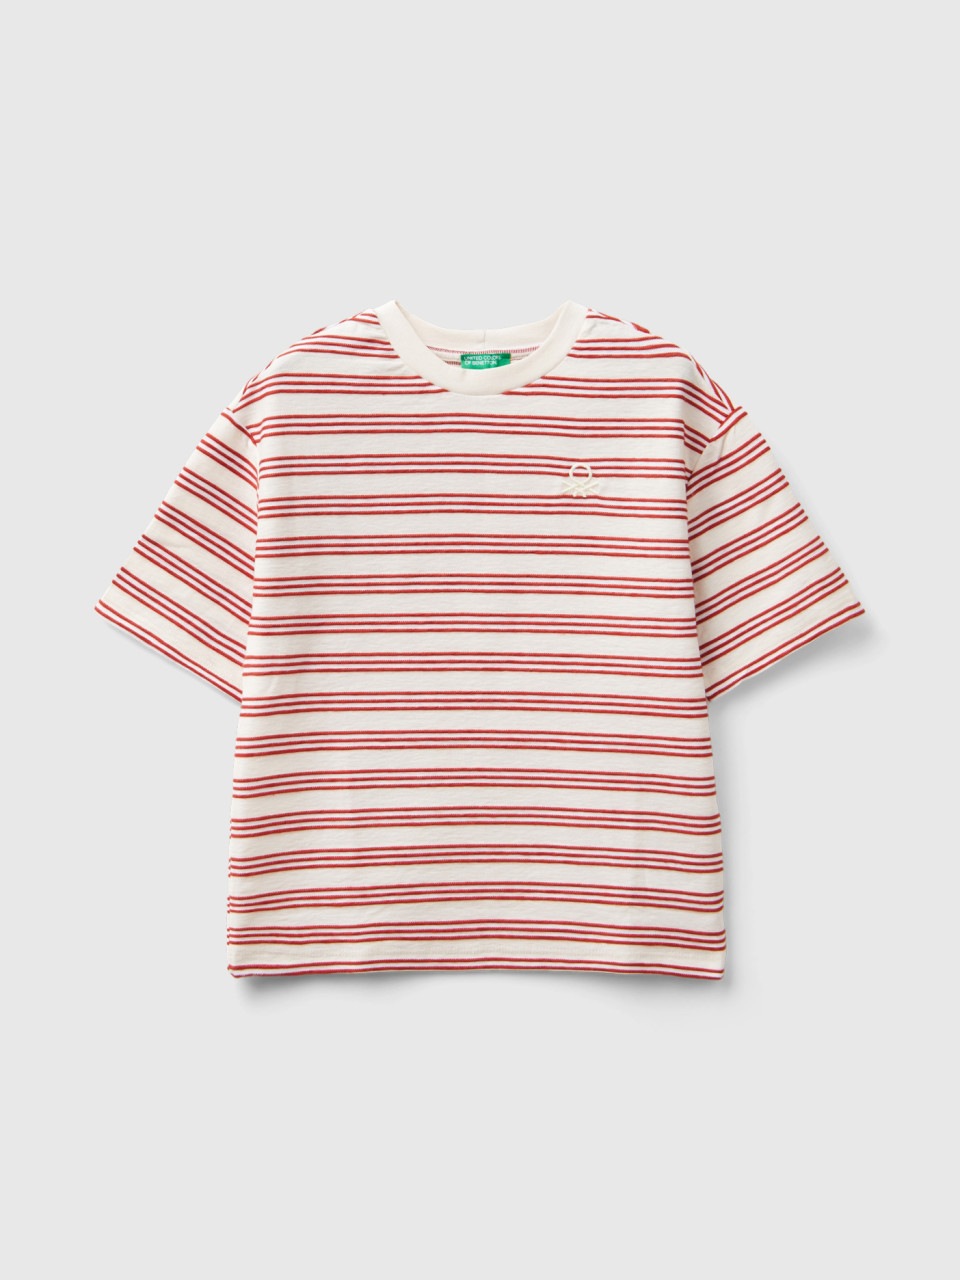 Benetton, Oversized Striped T-shirt, Creamy White, Kids